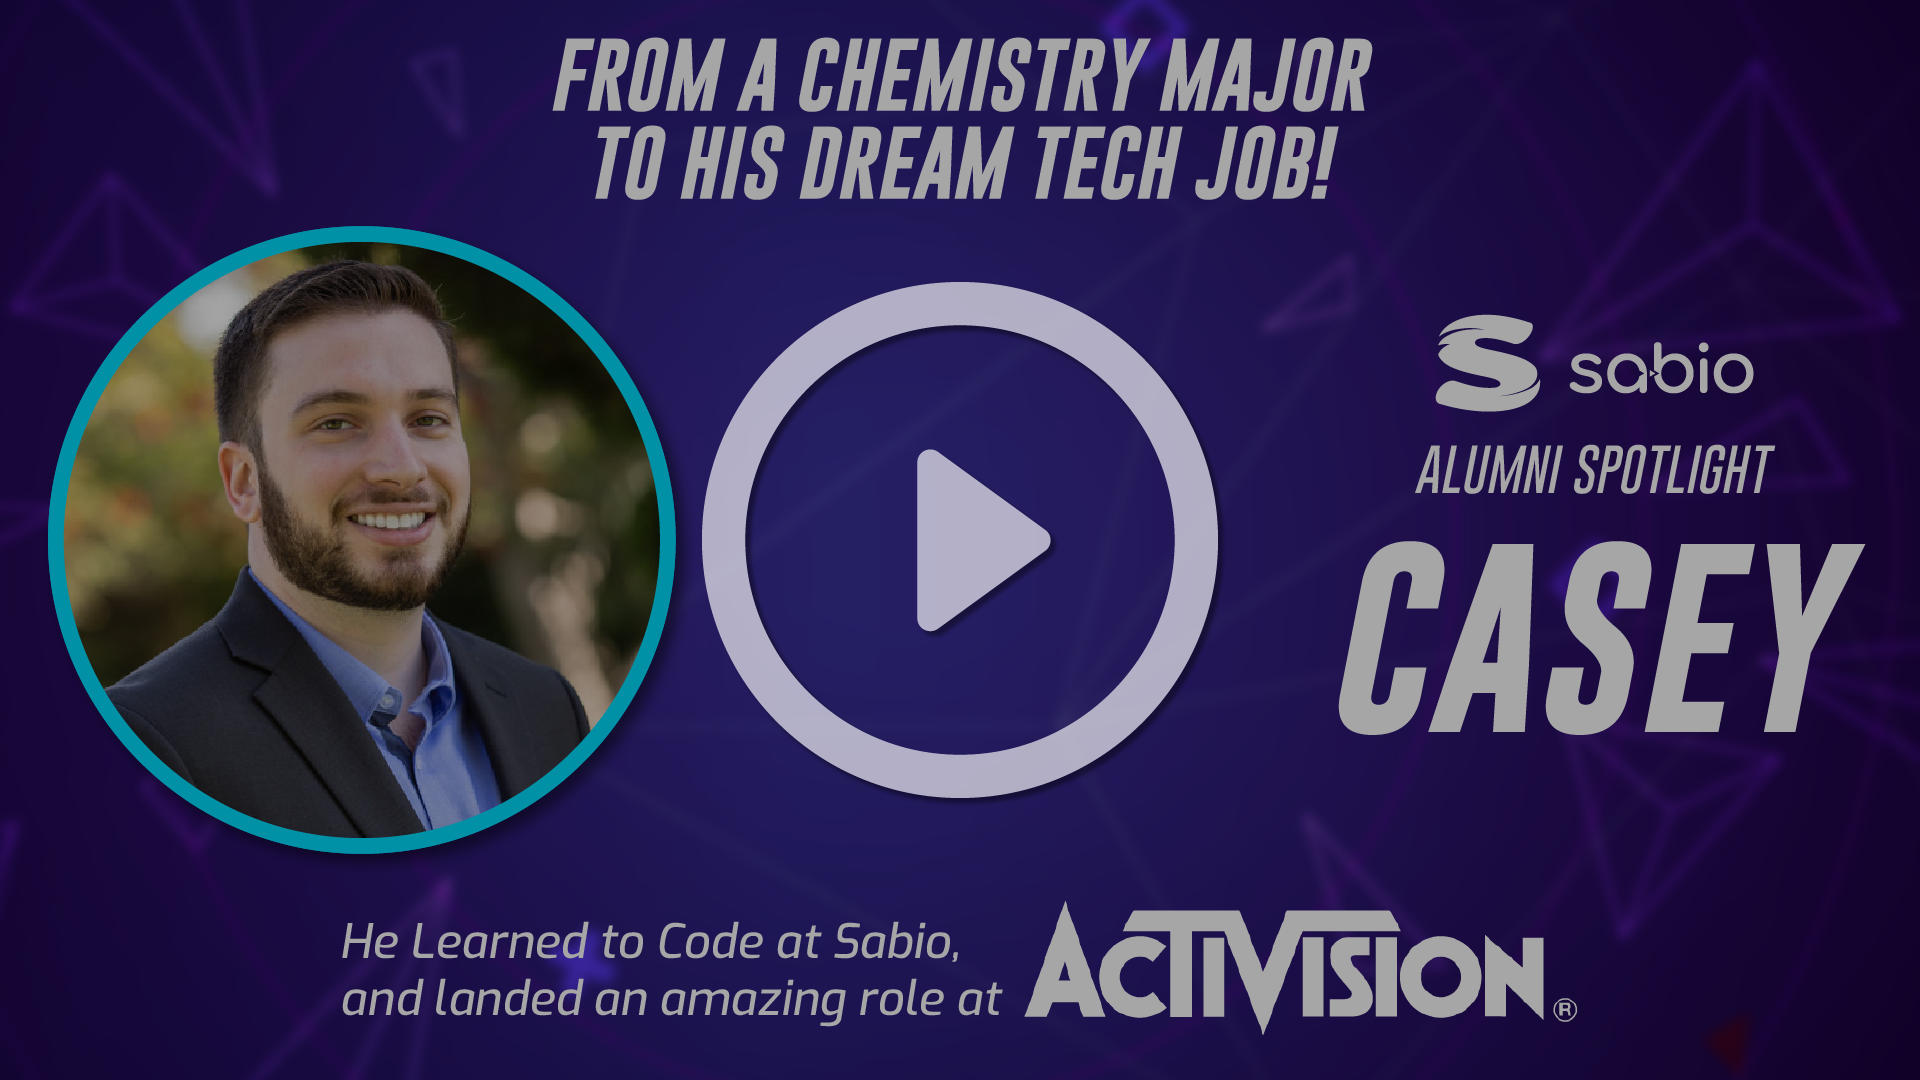 Sabio Alumni Spotlight: Casey. Play symbol overlaid to the image.